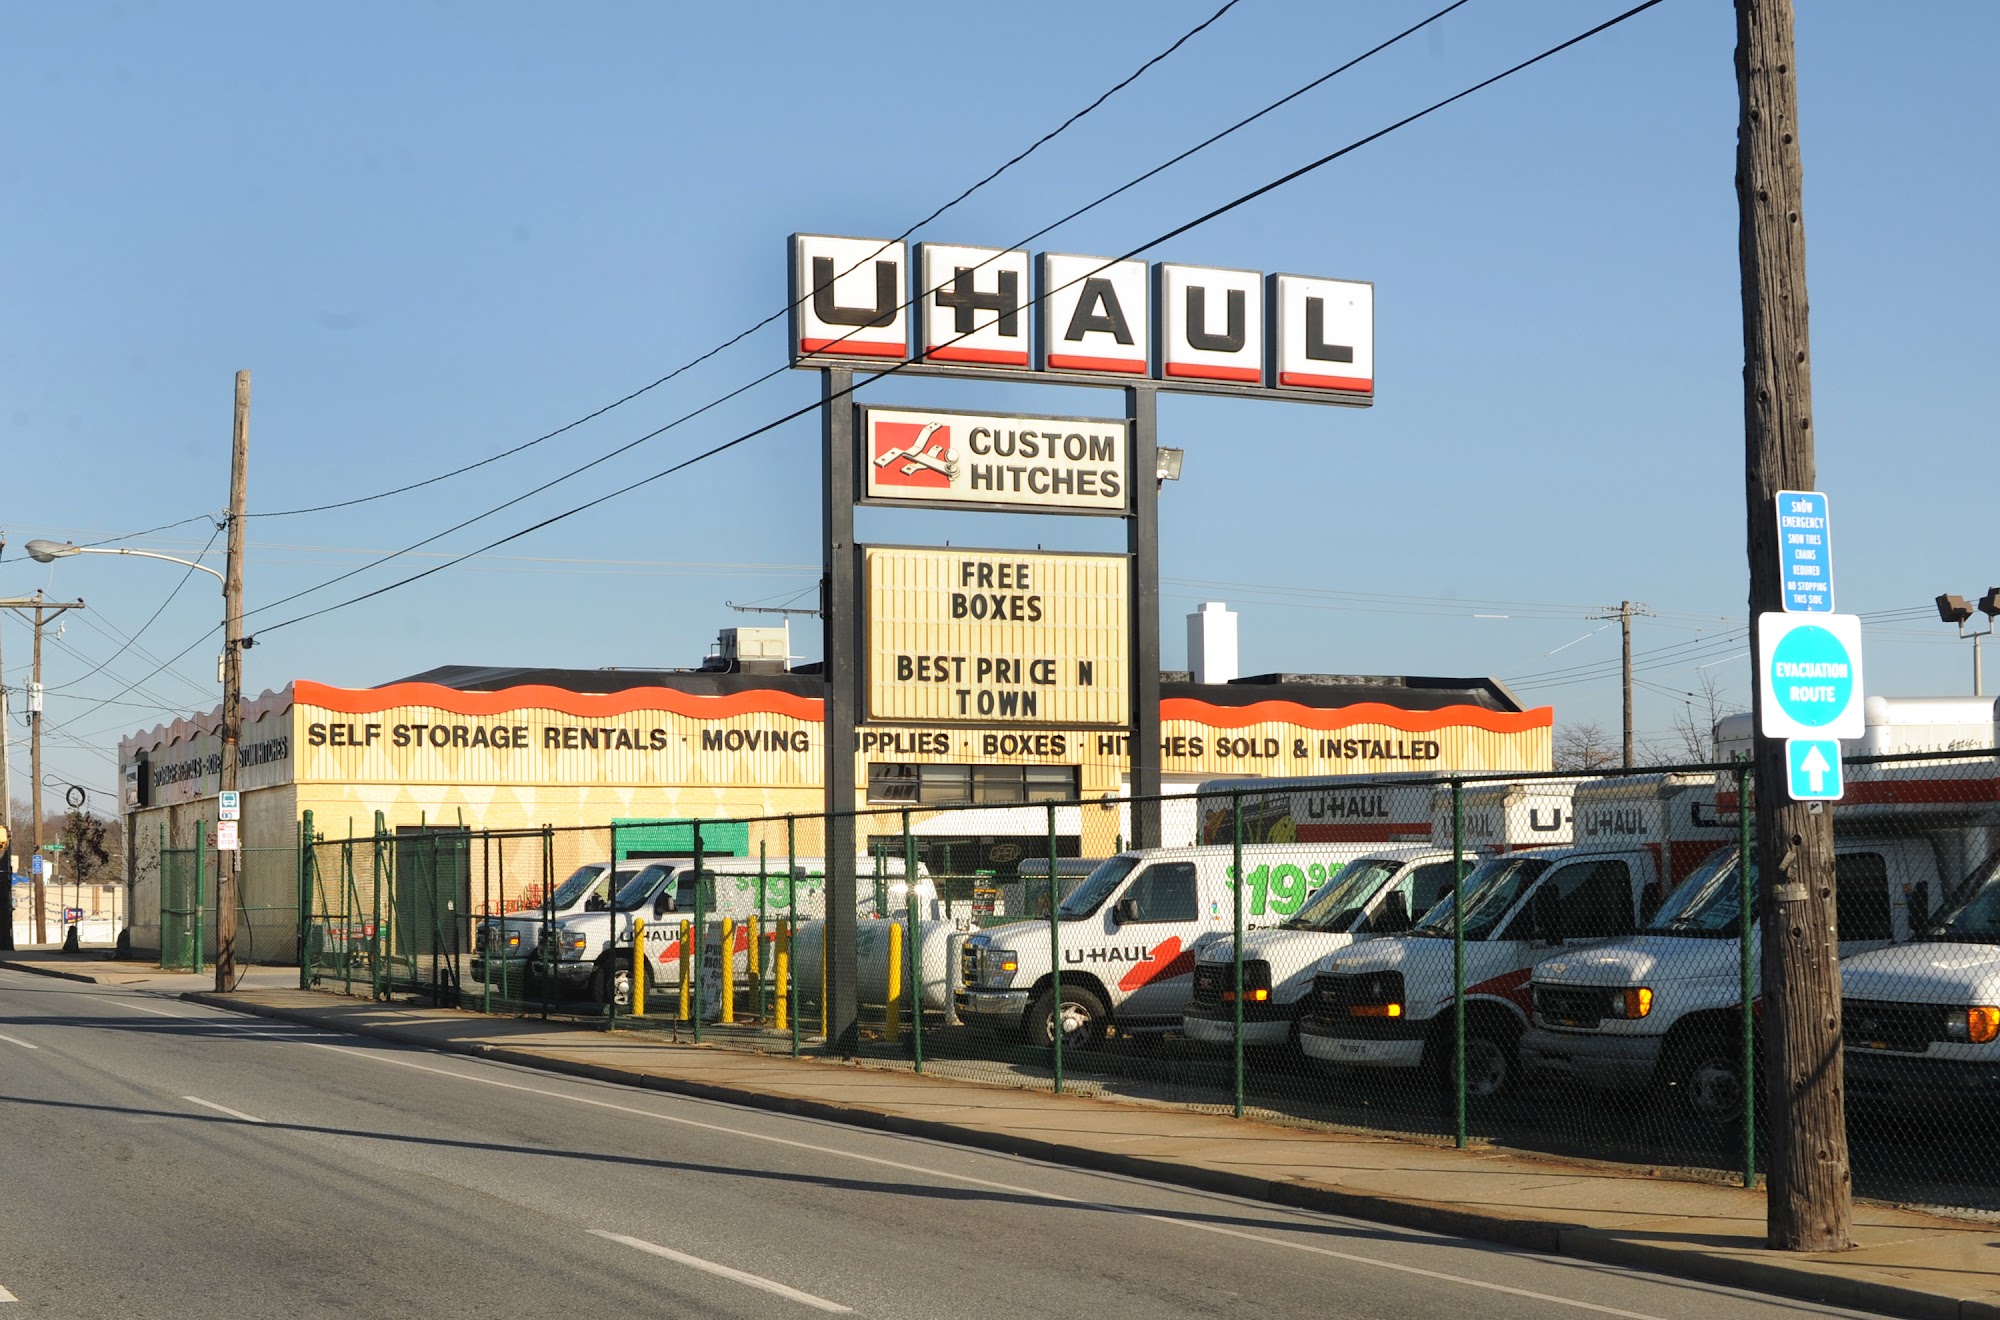 U-Haul Moving & Storage of Wilmington